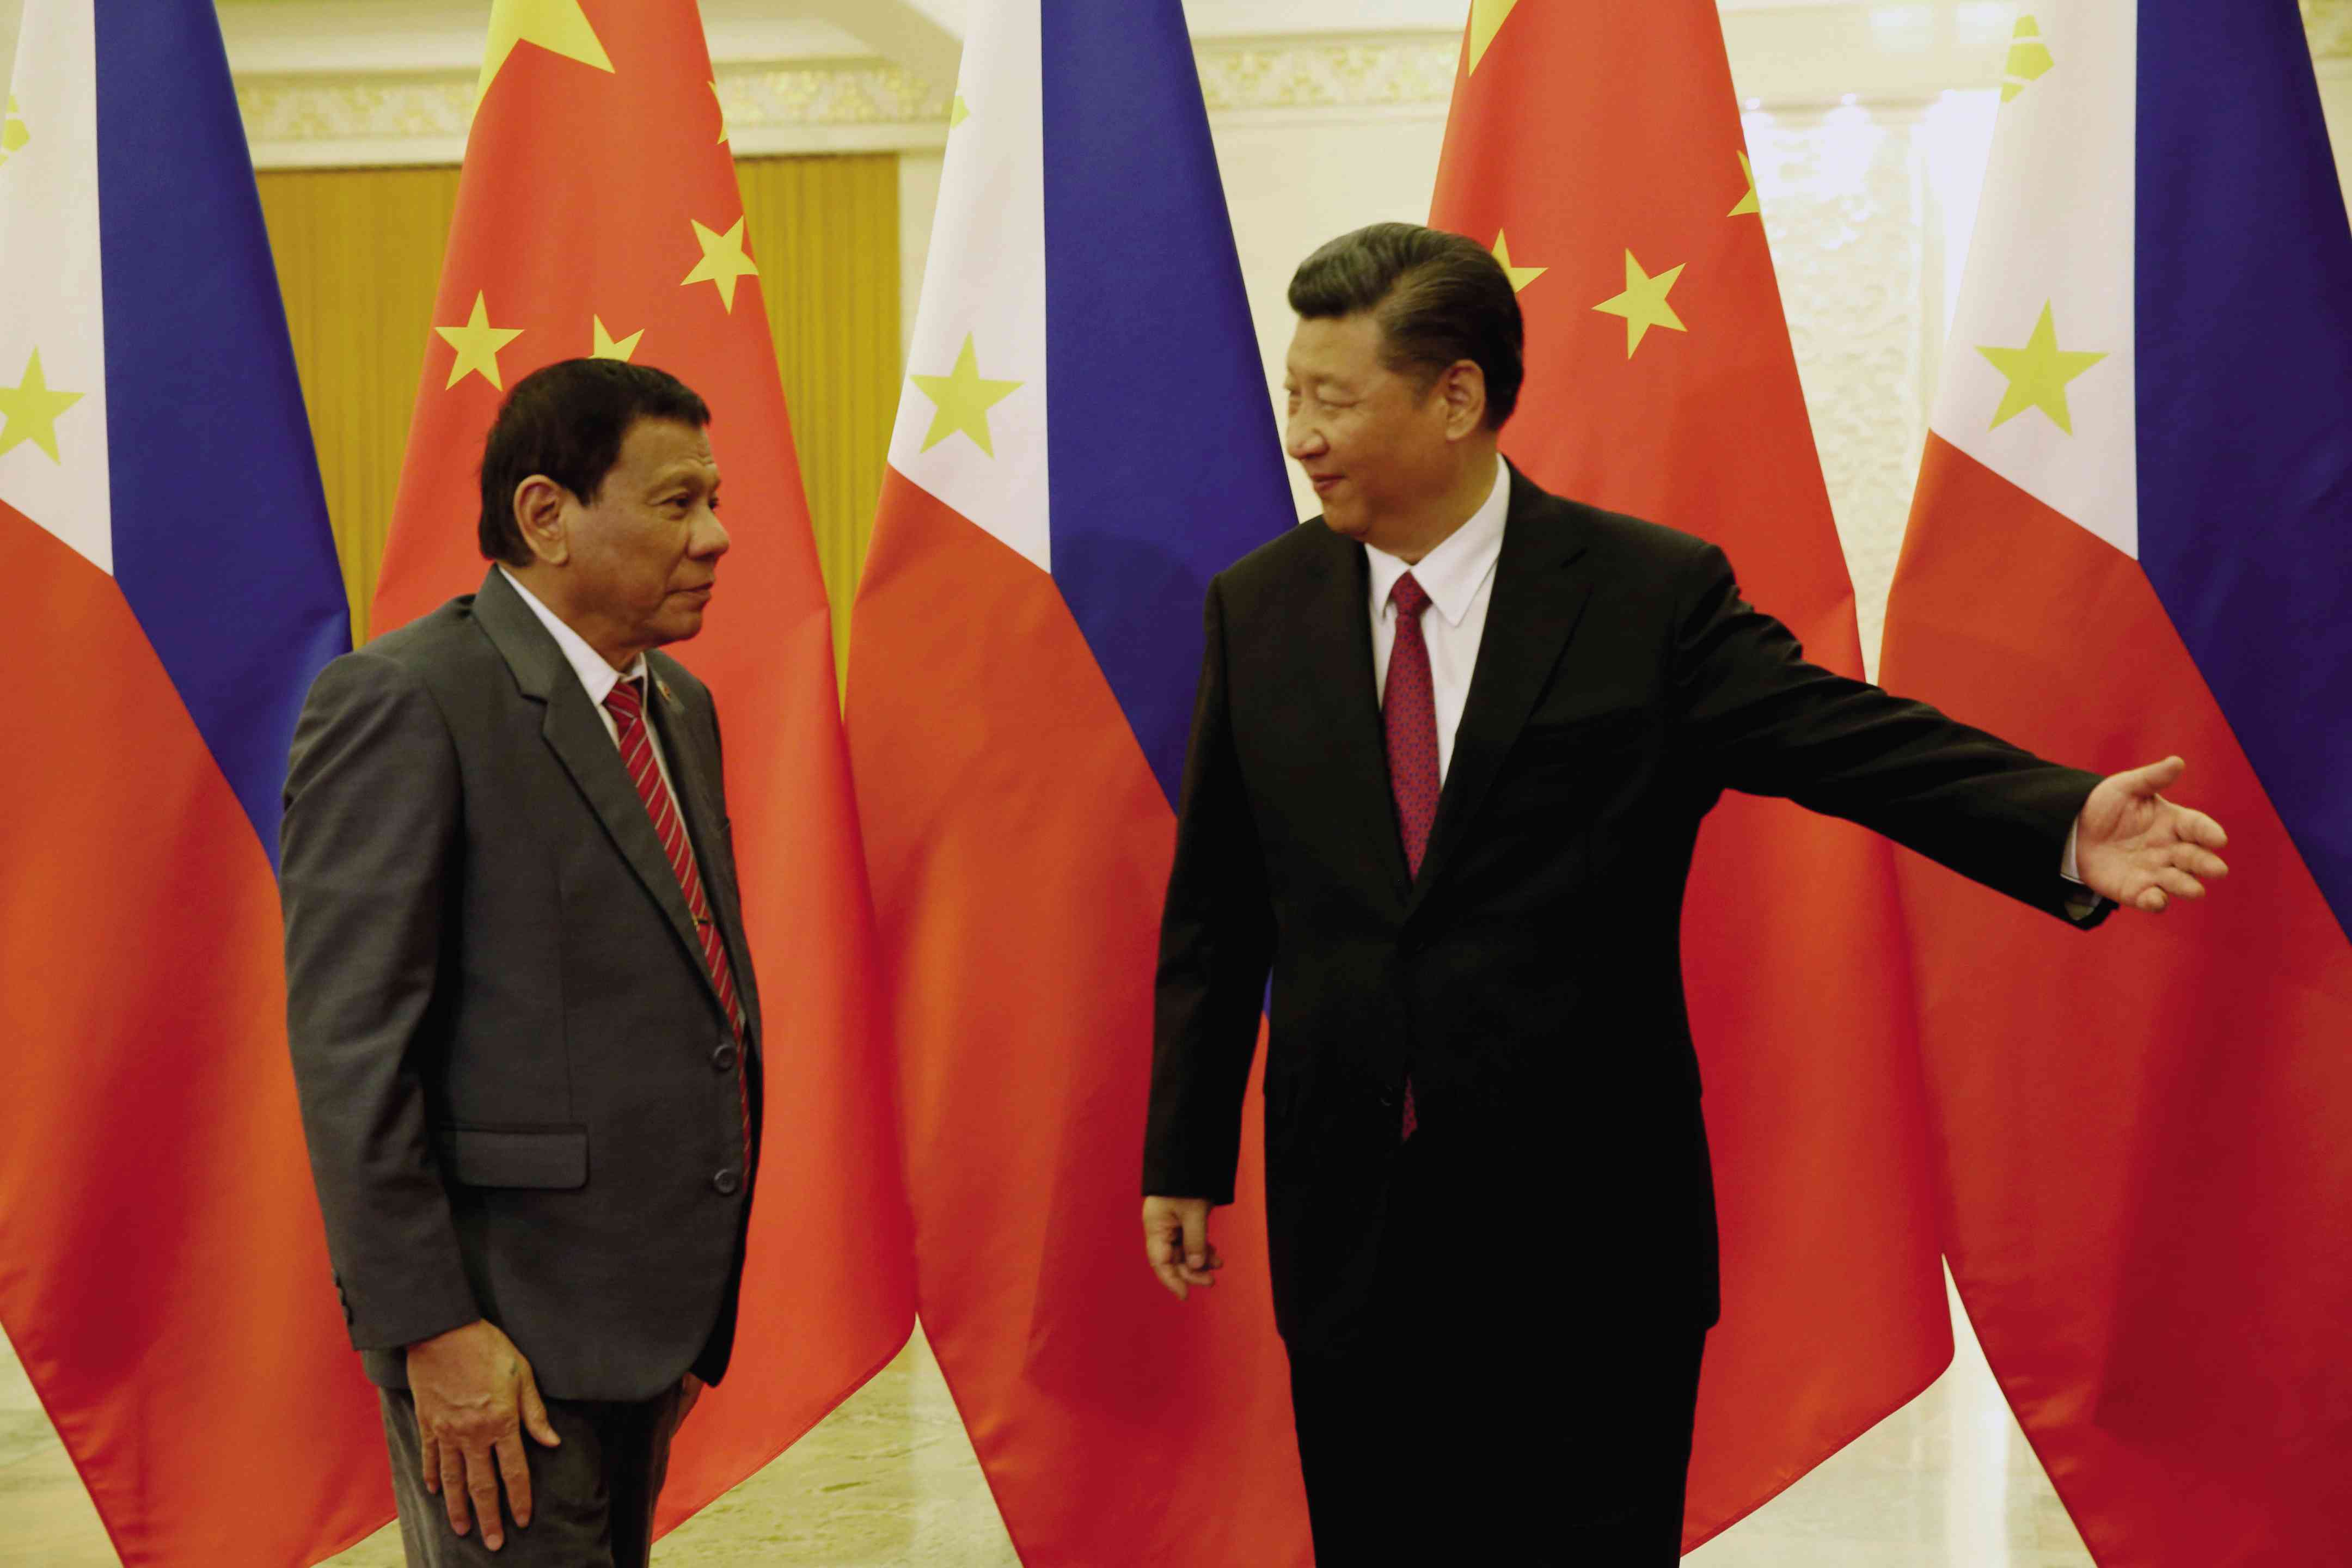 Palace: Poll saying many doubts China plans for PH ‘political propaganda’